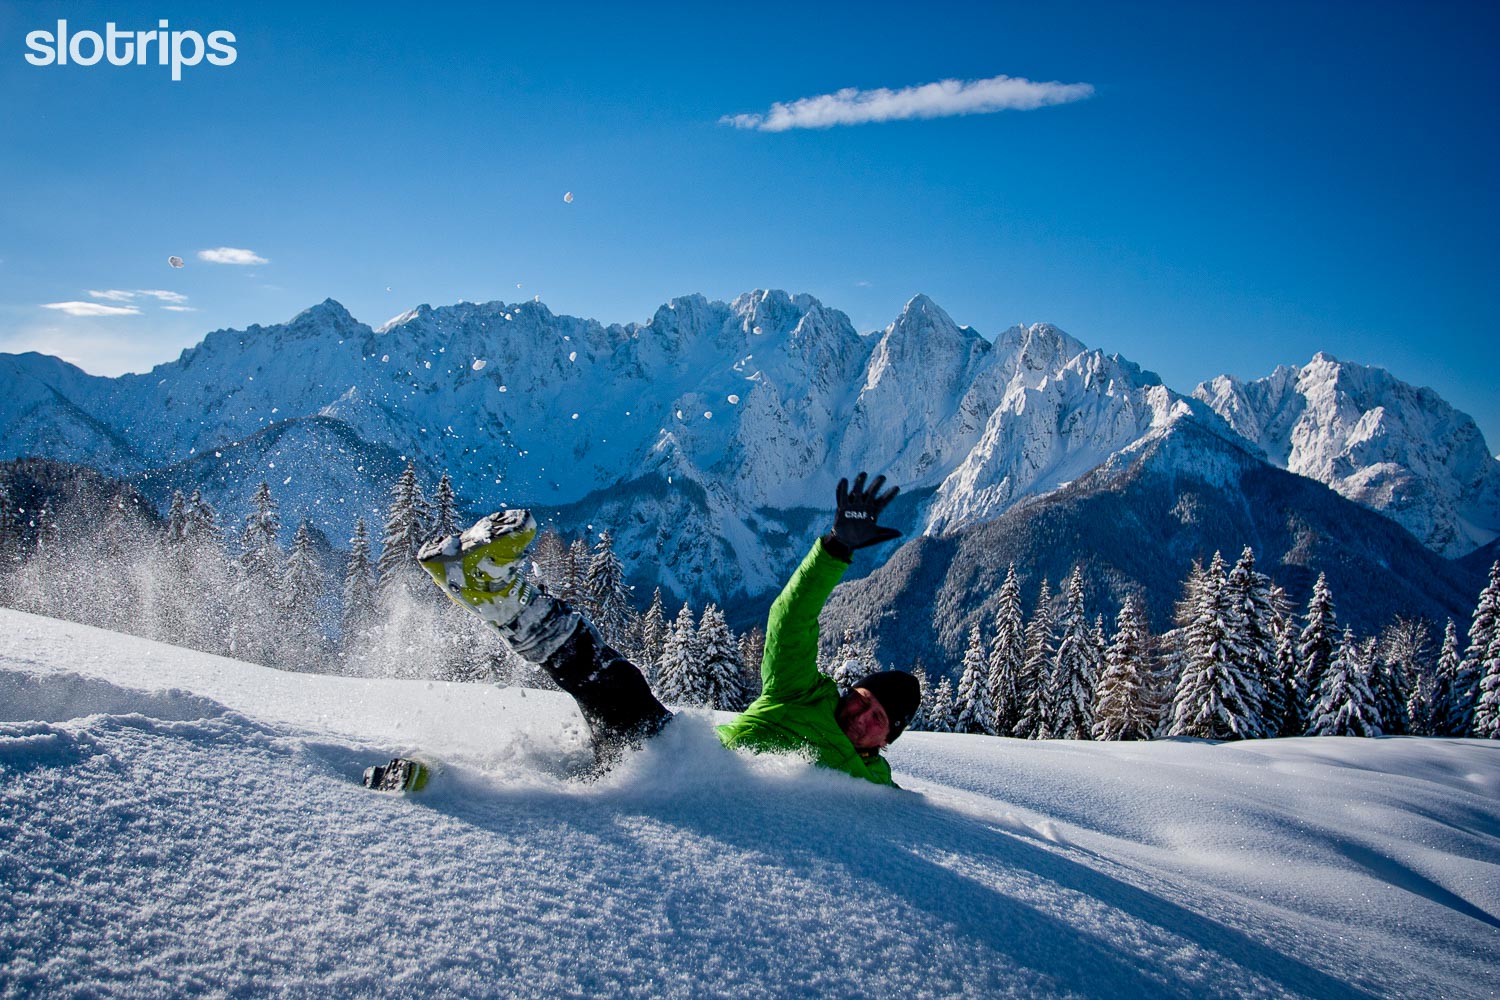 winter joys in slovenia